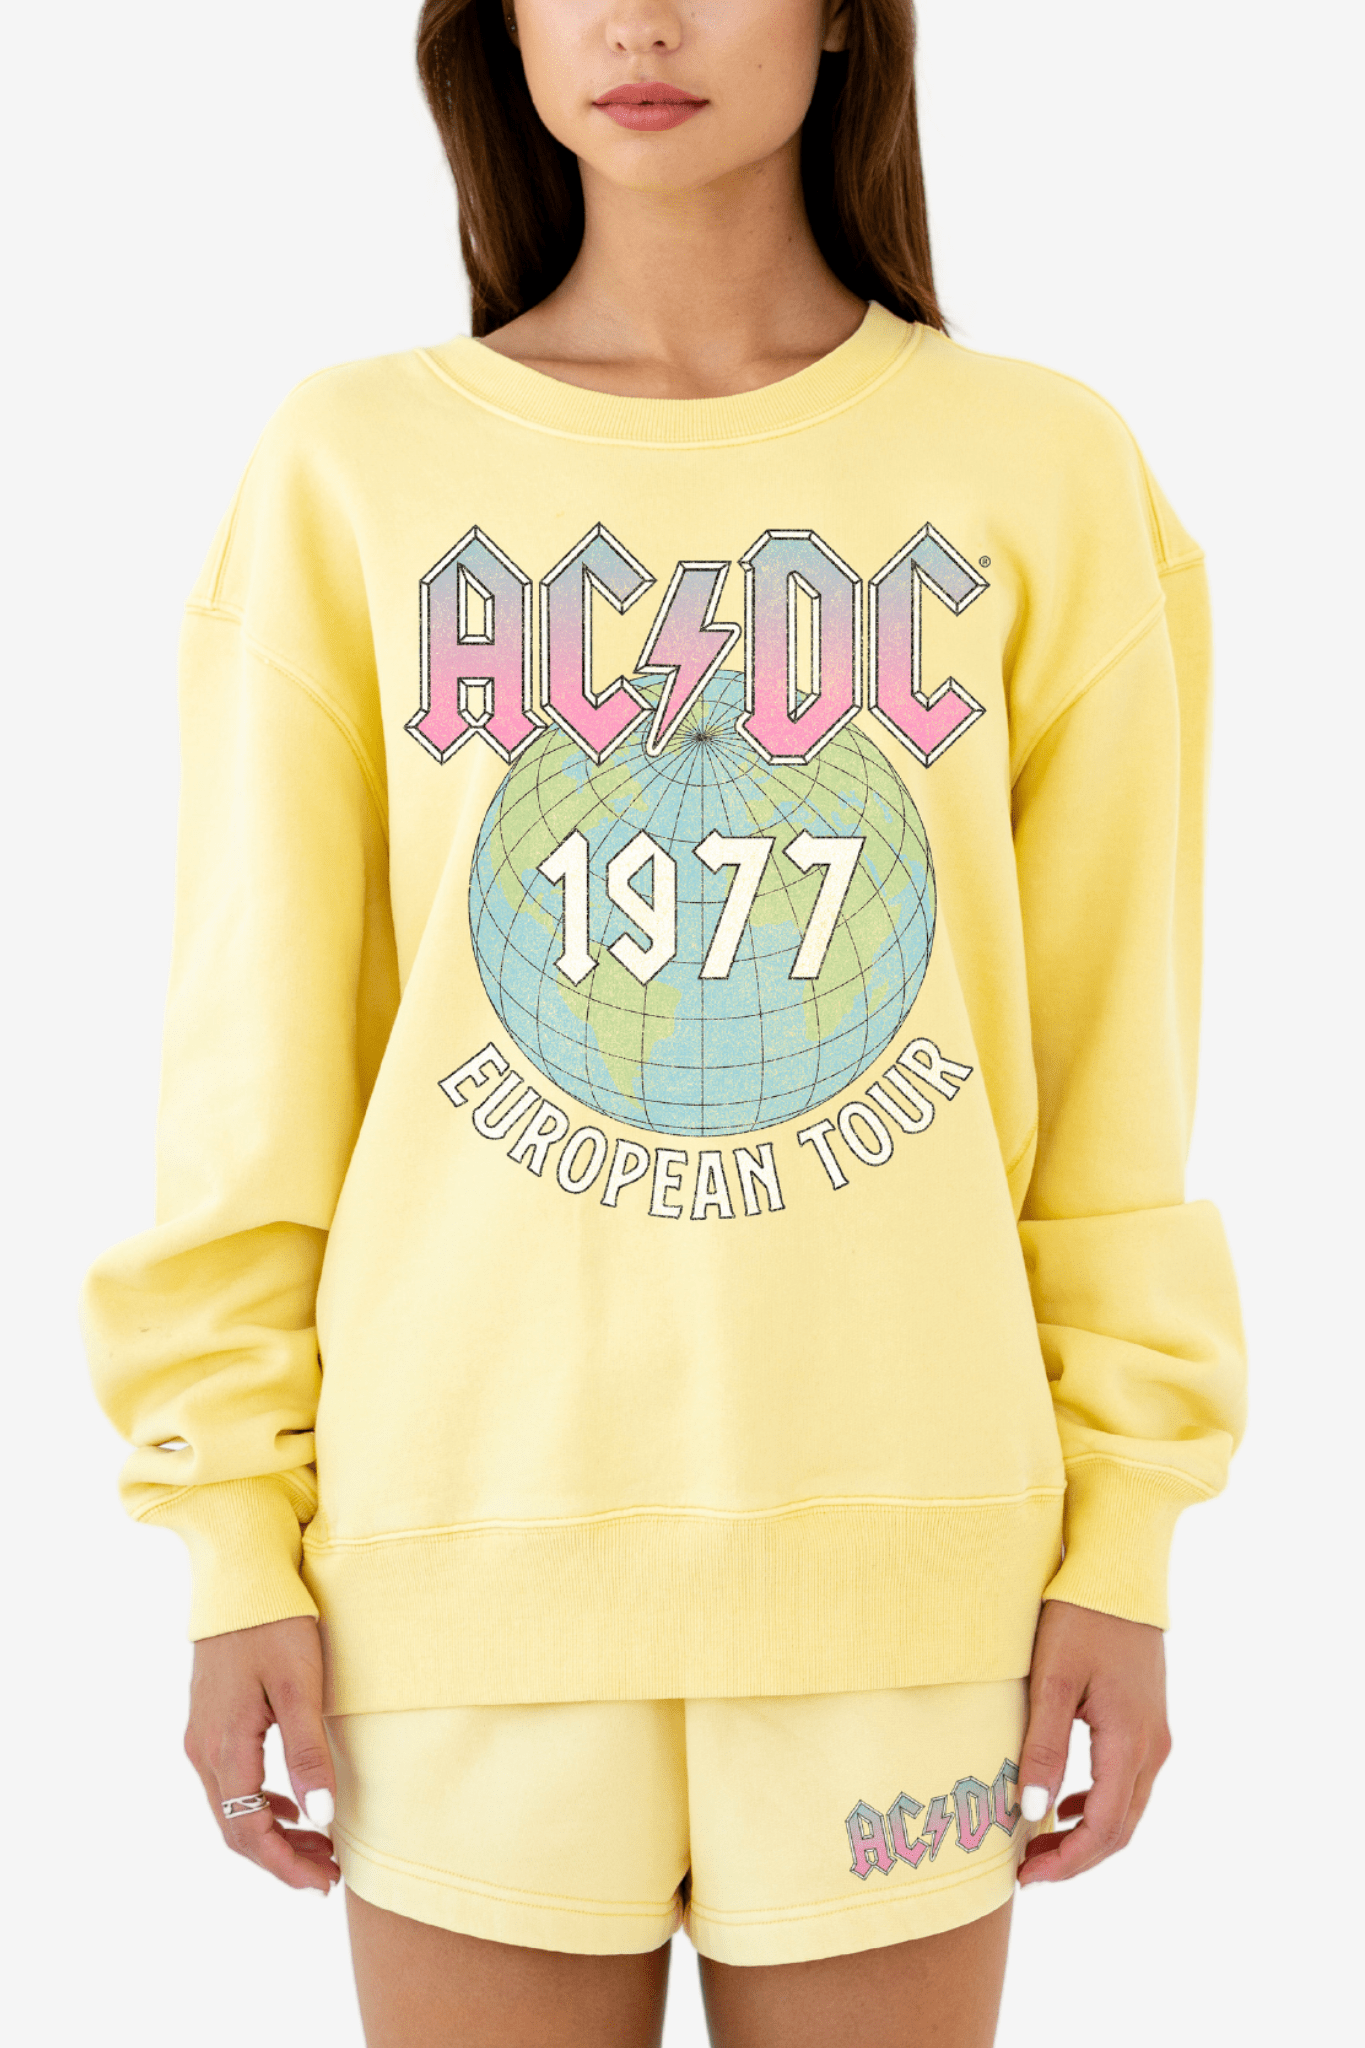 AC/DC European Tour Sweatshirt